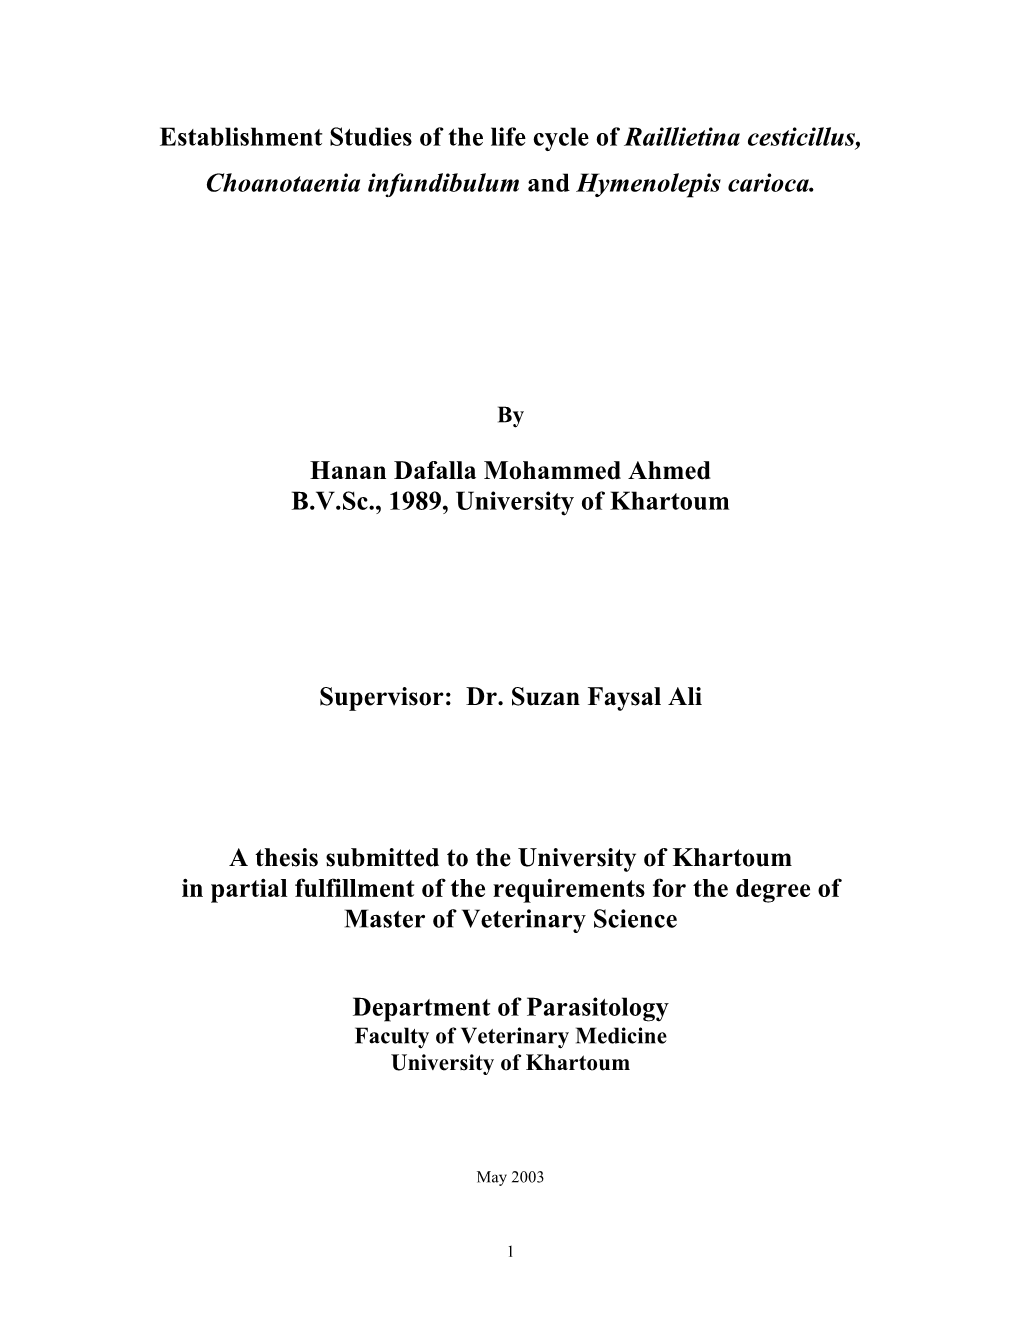 Establishment Studies of the Life Cycle of Raillietina Cesticillus, Choanotaenia Infundibulum and Hymenolepis Carioca